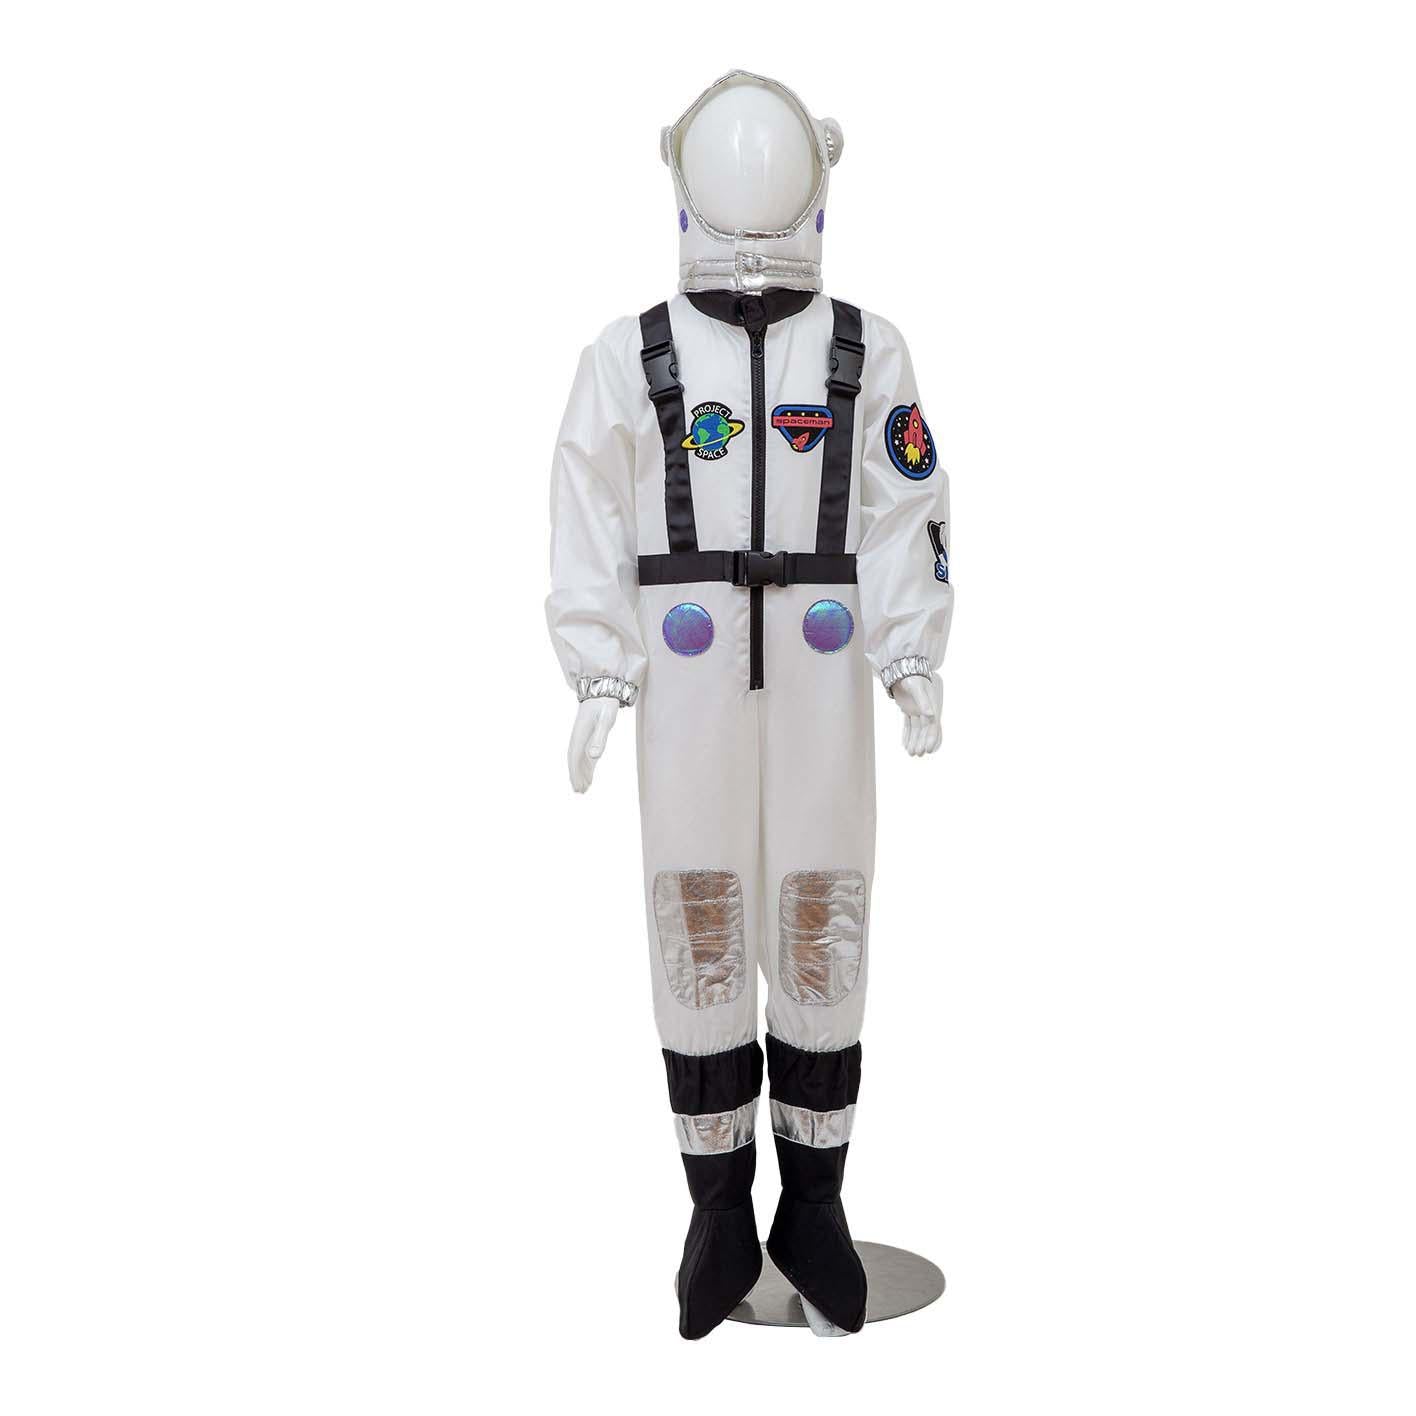 Child Astronaut Costume Costumes & Apparel - Party Centre - Party Centre